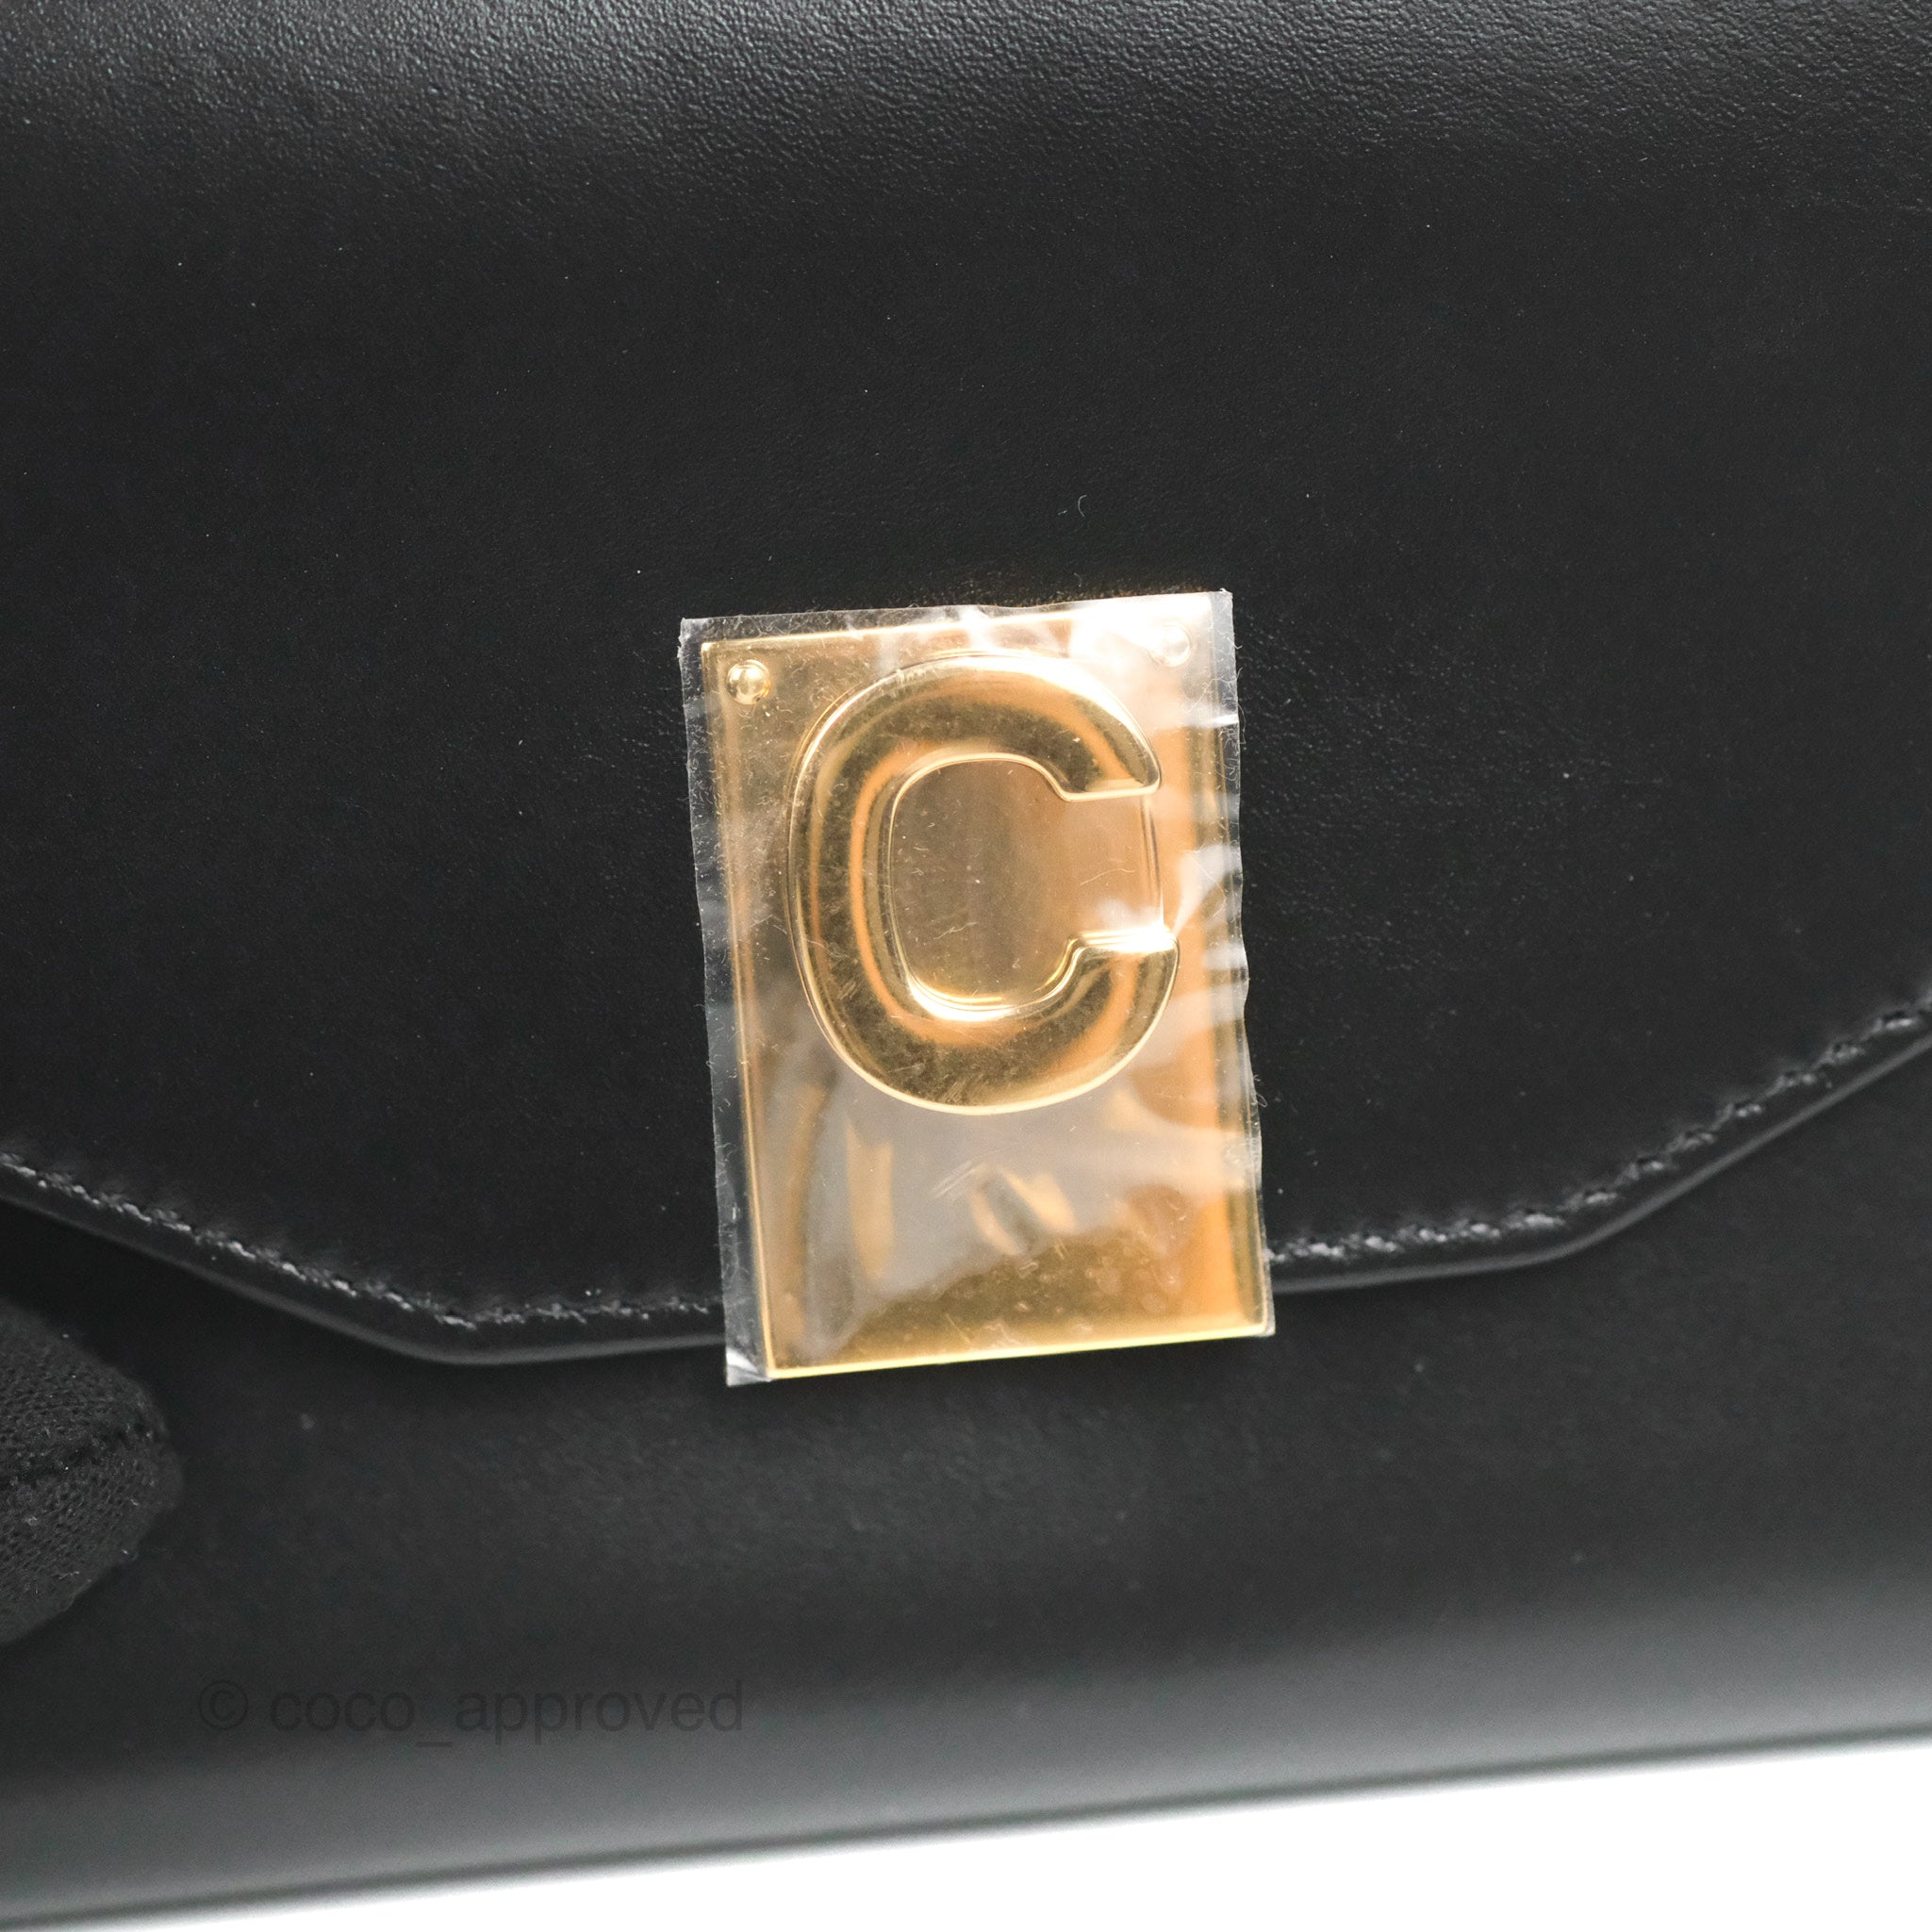 Celine C Wallet On Chain In Smooth Calfskin in Black